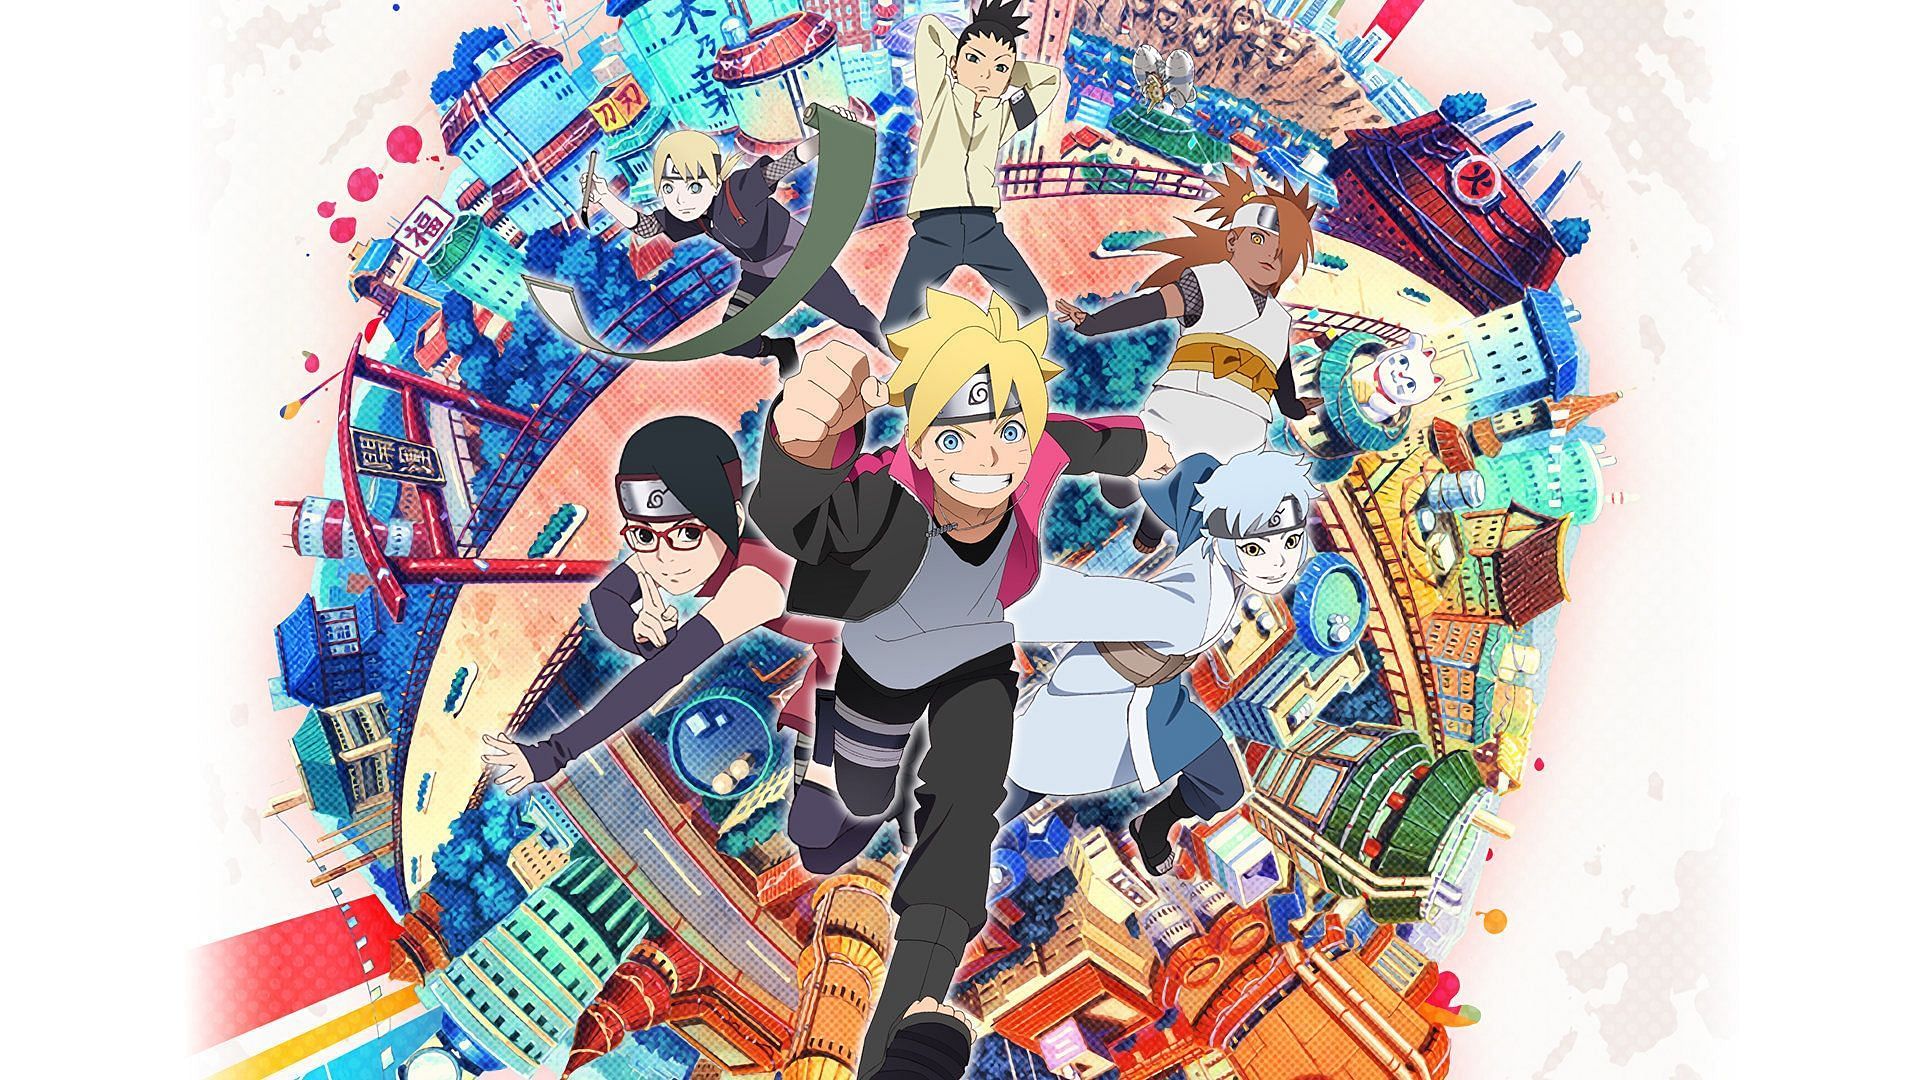 BORUTO EPISODE 231 REVIEW  Boruto episodes, Boruto, Anime reviews